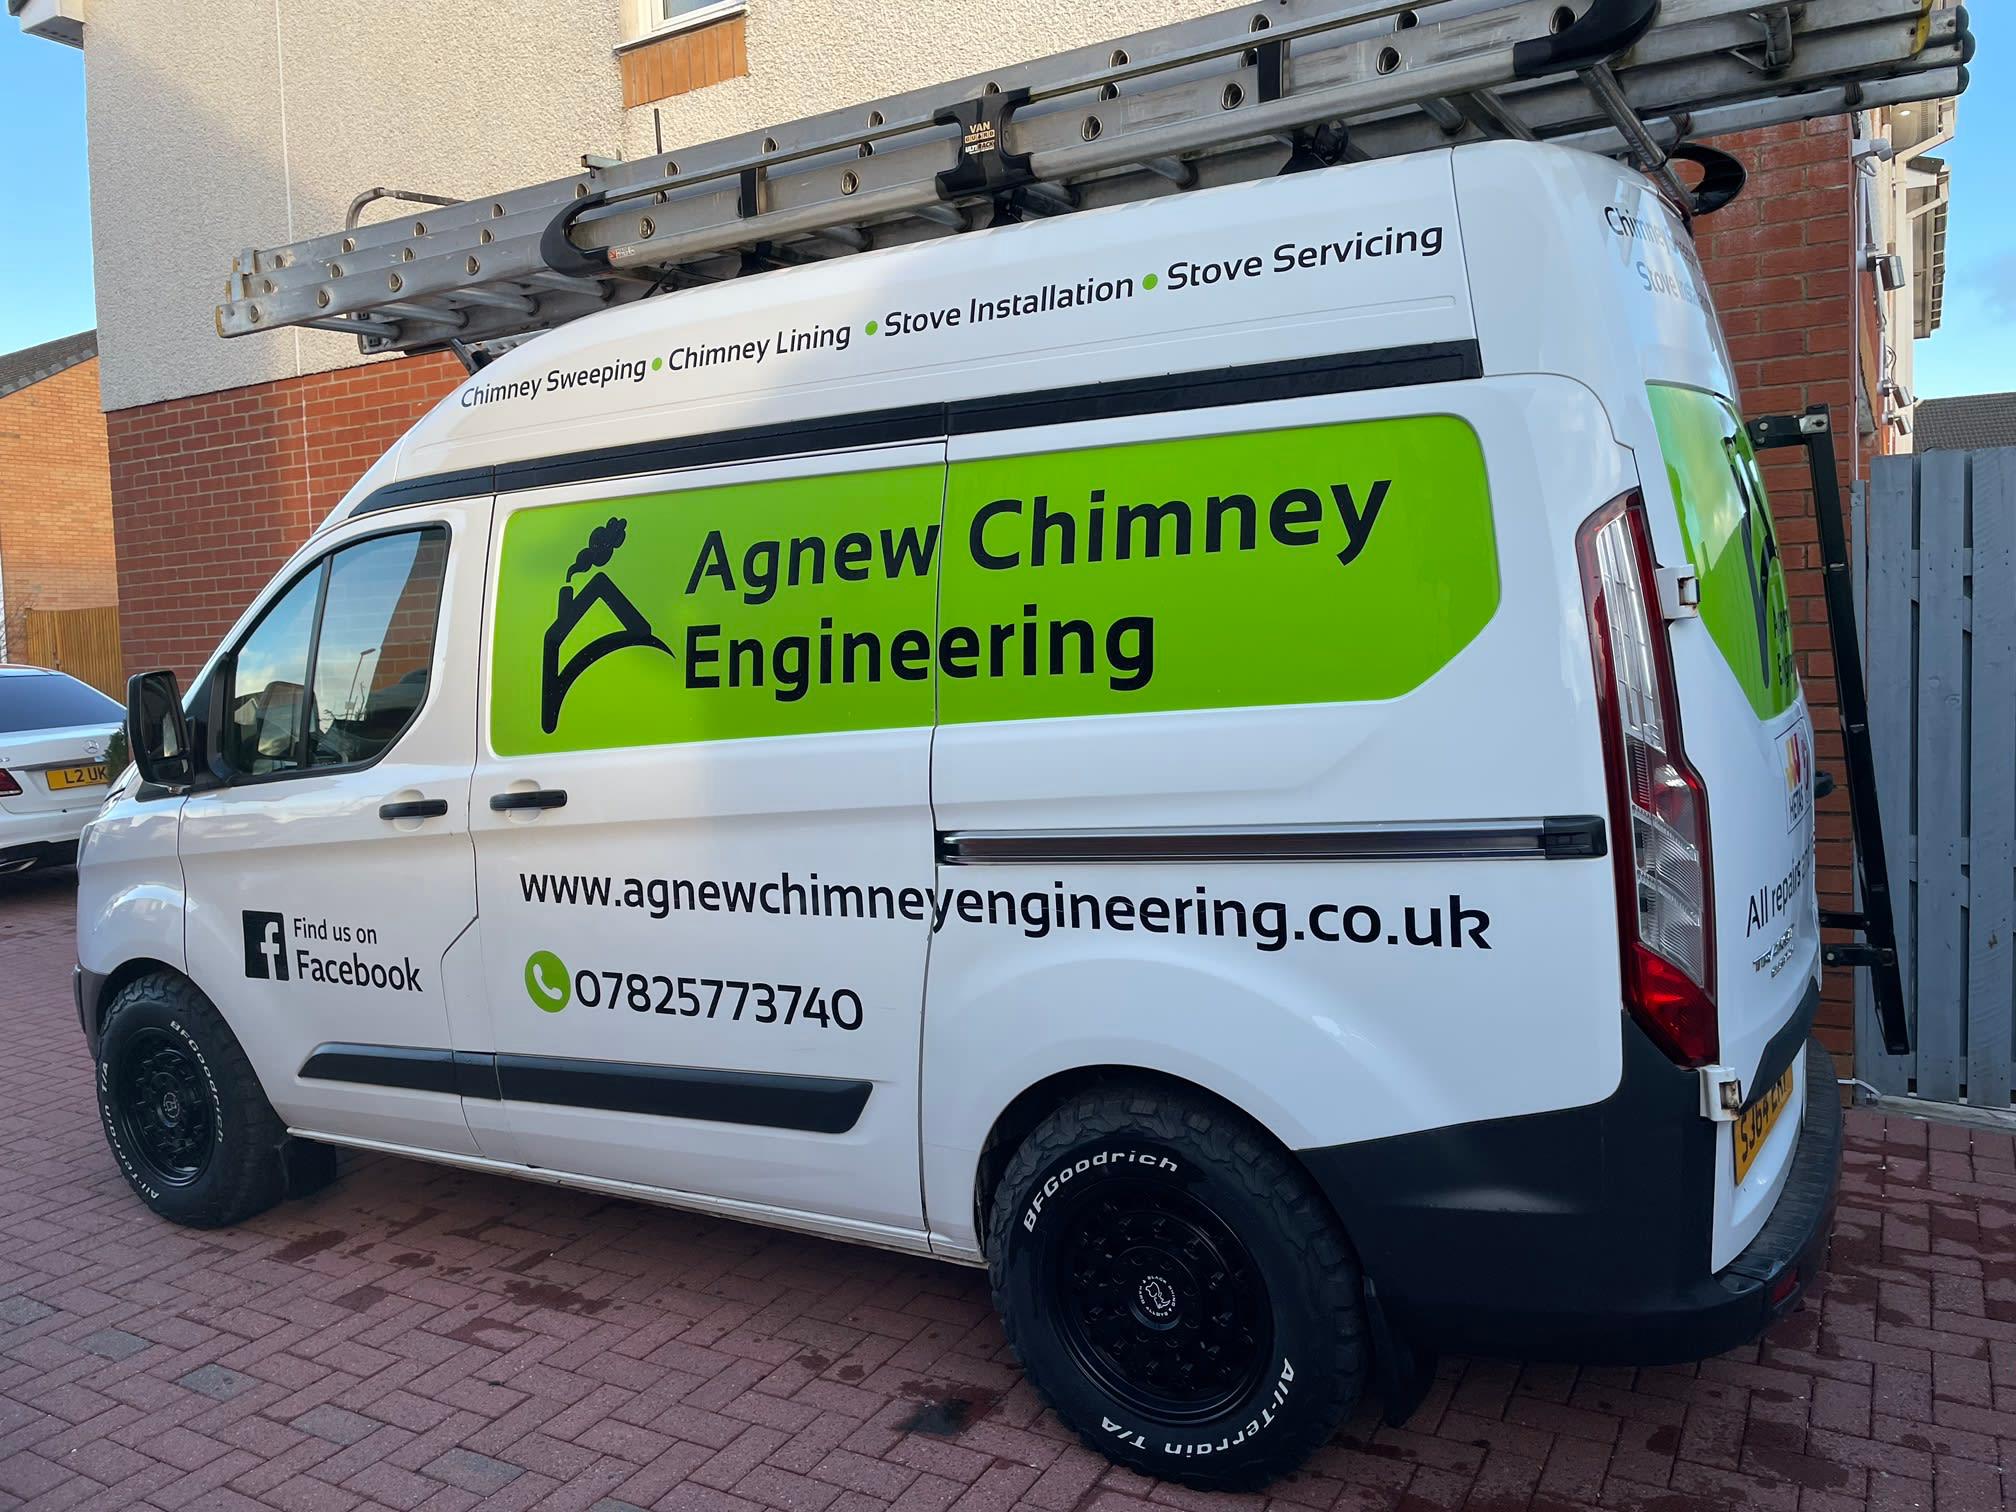 Images Agnew Chimney Engineering Ltd